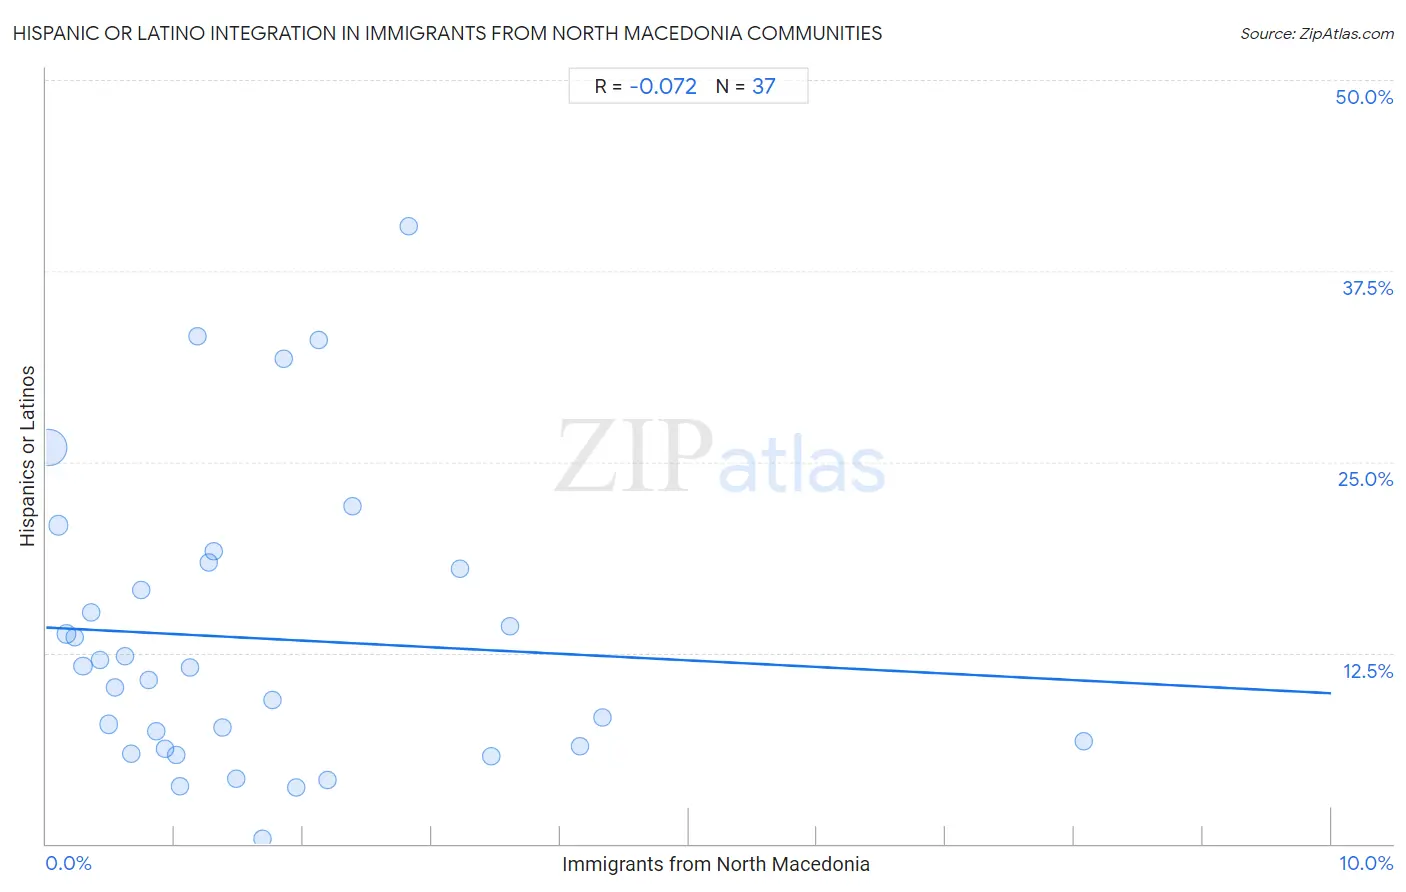 Immigrants from North Macedonia Integration in Hispanic or Latino Communities